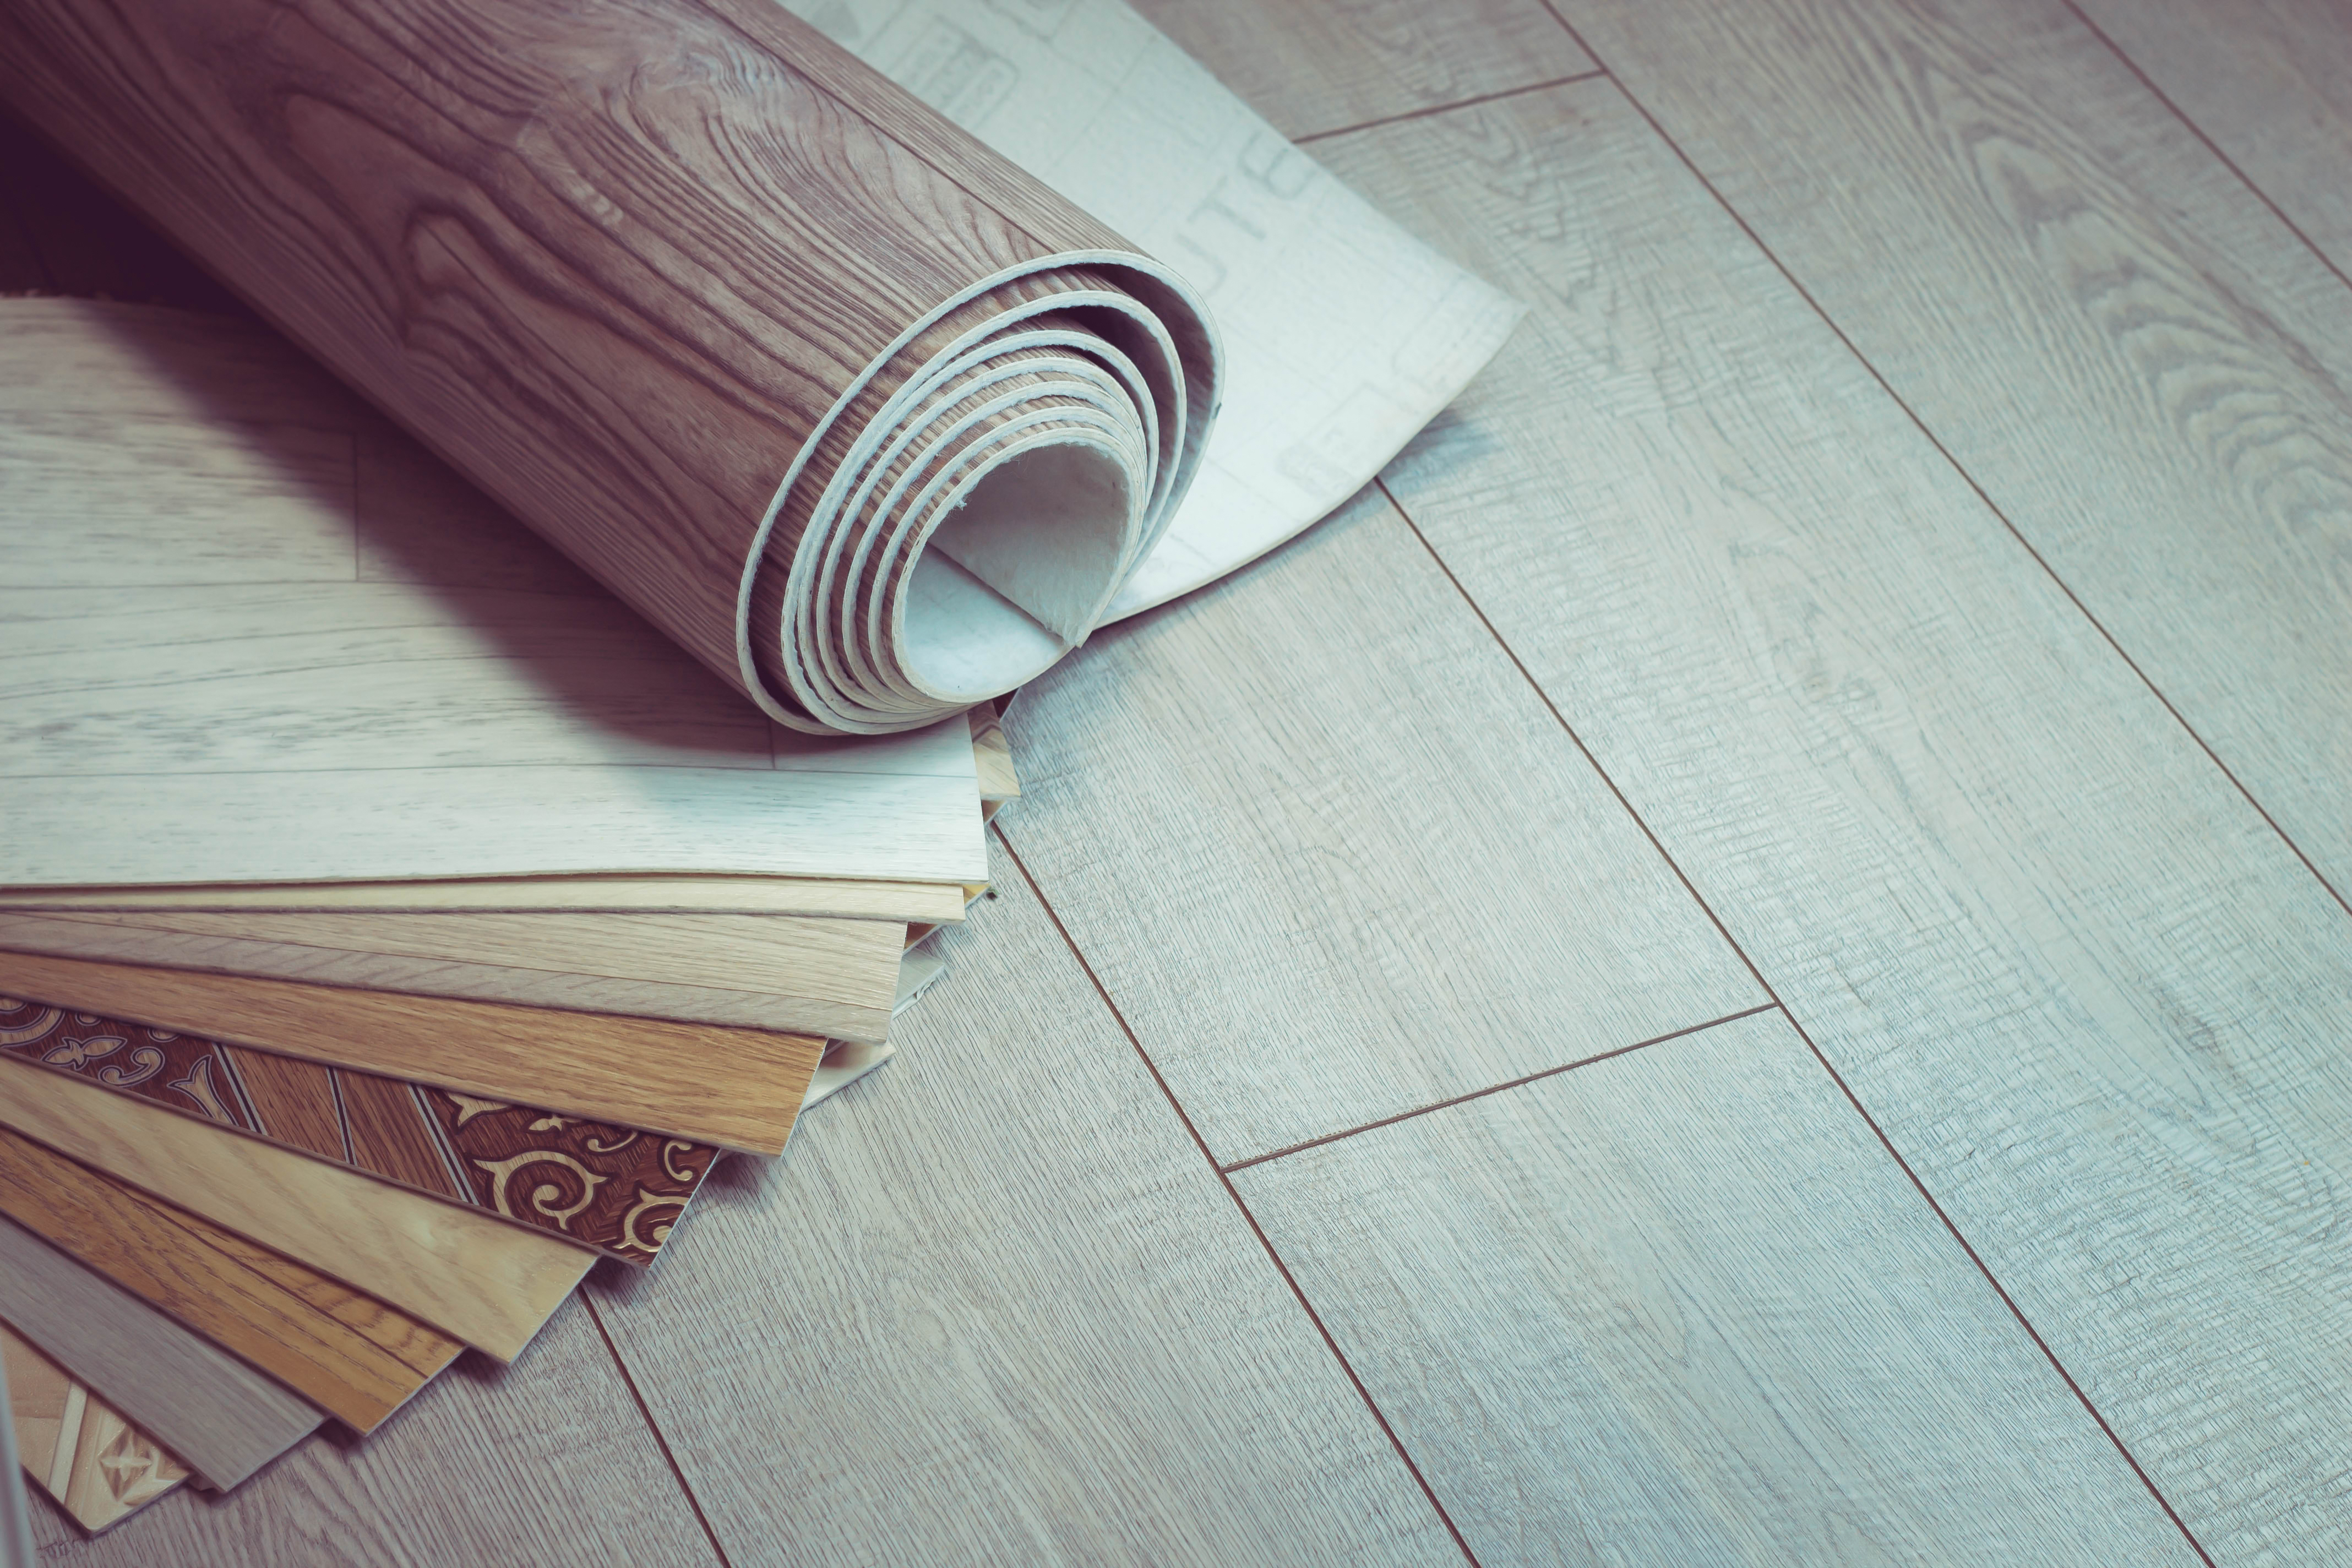 How to Patch Carpet (Project Summary) - Bob Vila